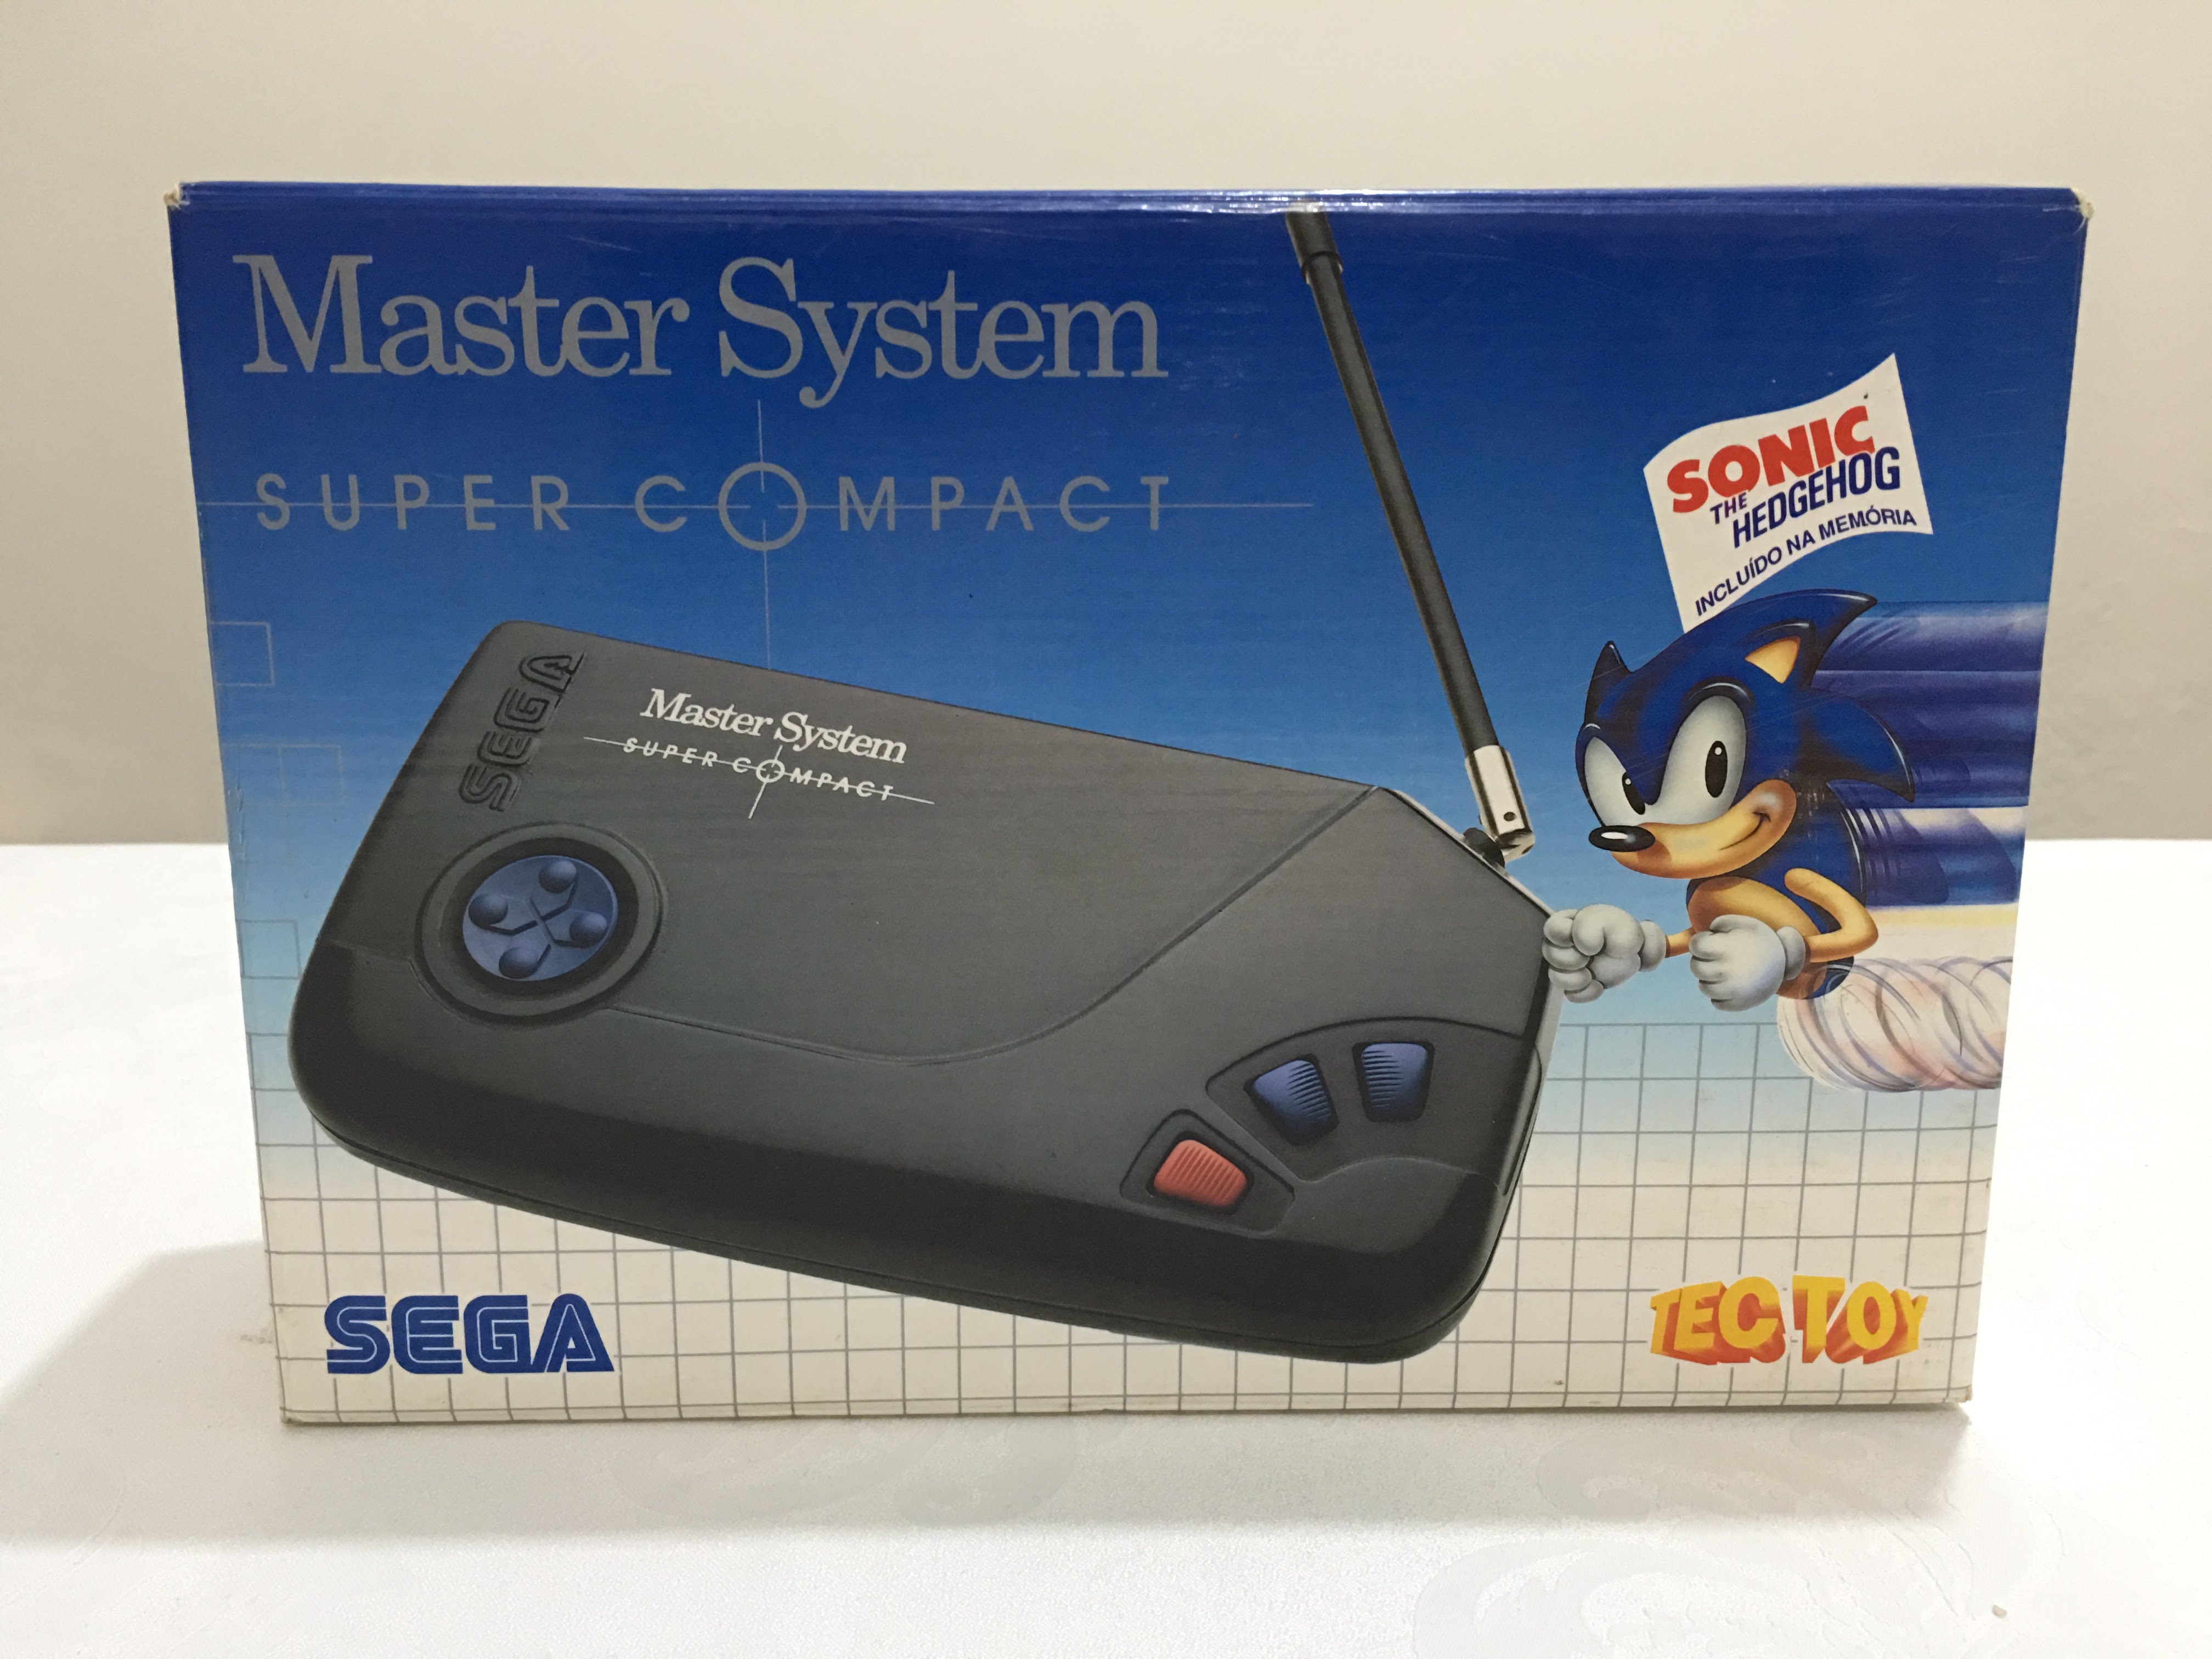 Джойстик Sega Master System. Sega Tectoy. Сега Дрим карта памяти. Микросхема Tectoy 580 сега.